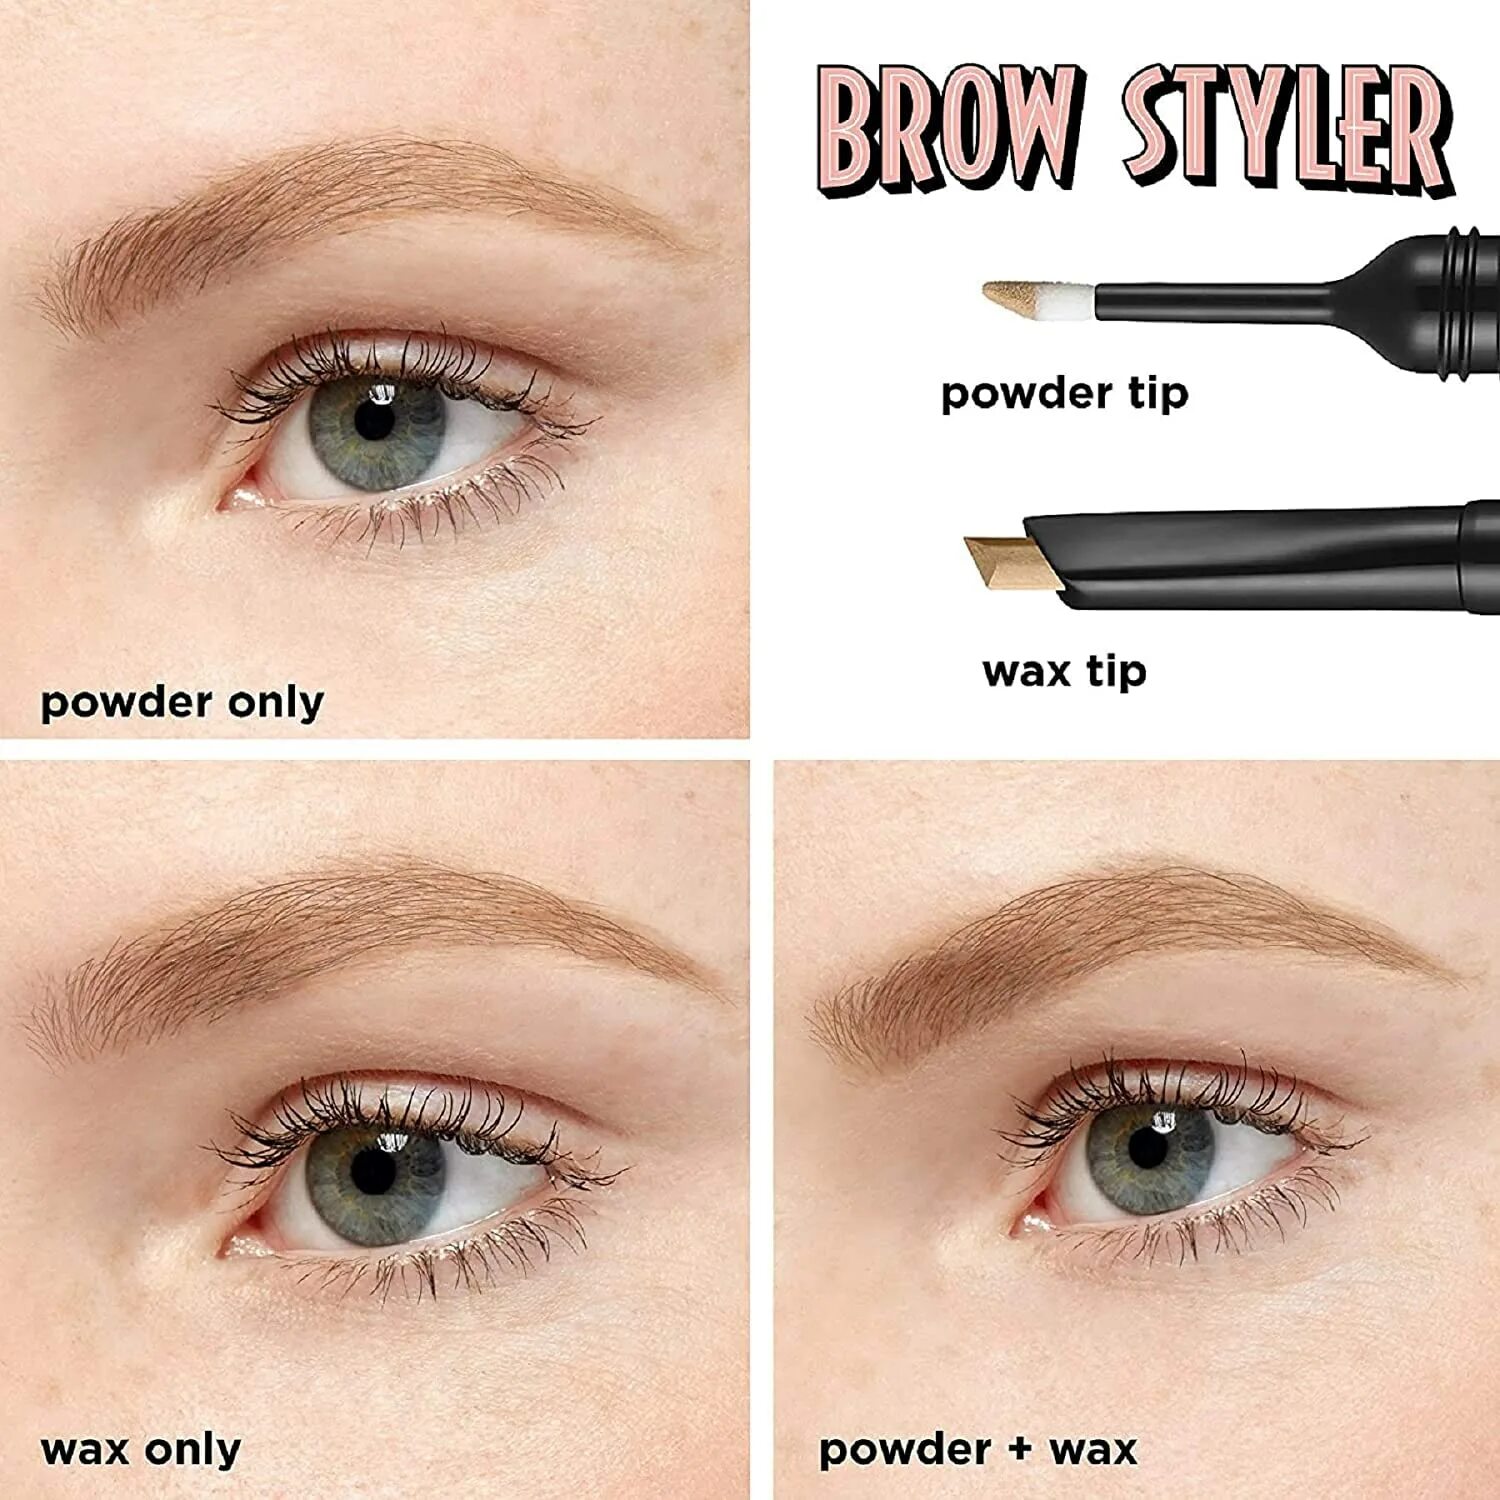 Benefit warm Light Brown карандаш для бровей. Benefit Brow Styler. Карандаш для бровей `Bell` perfect Brow Wax тон 01. Brow Styler benefit оттенки. Benefit brow